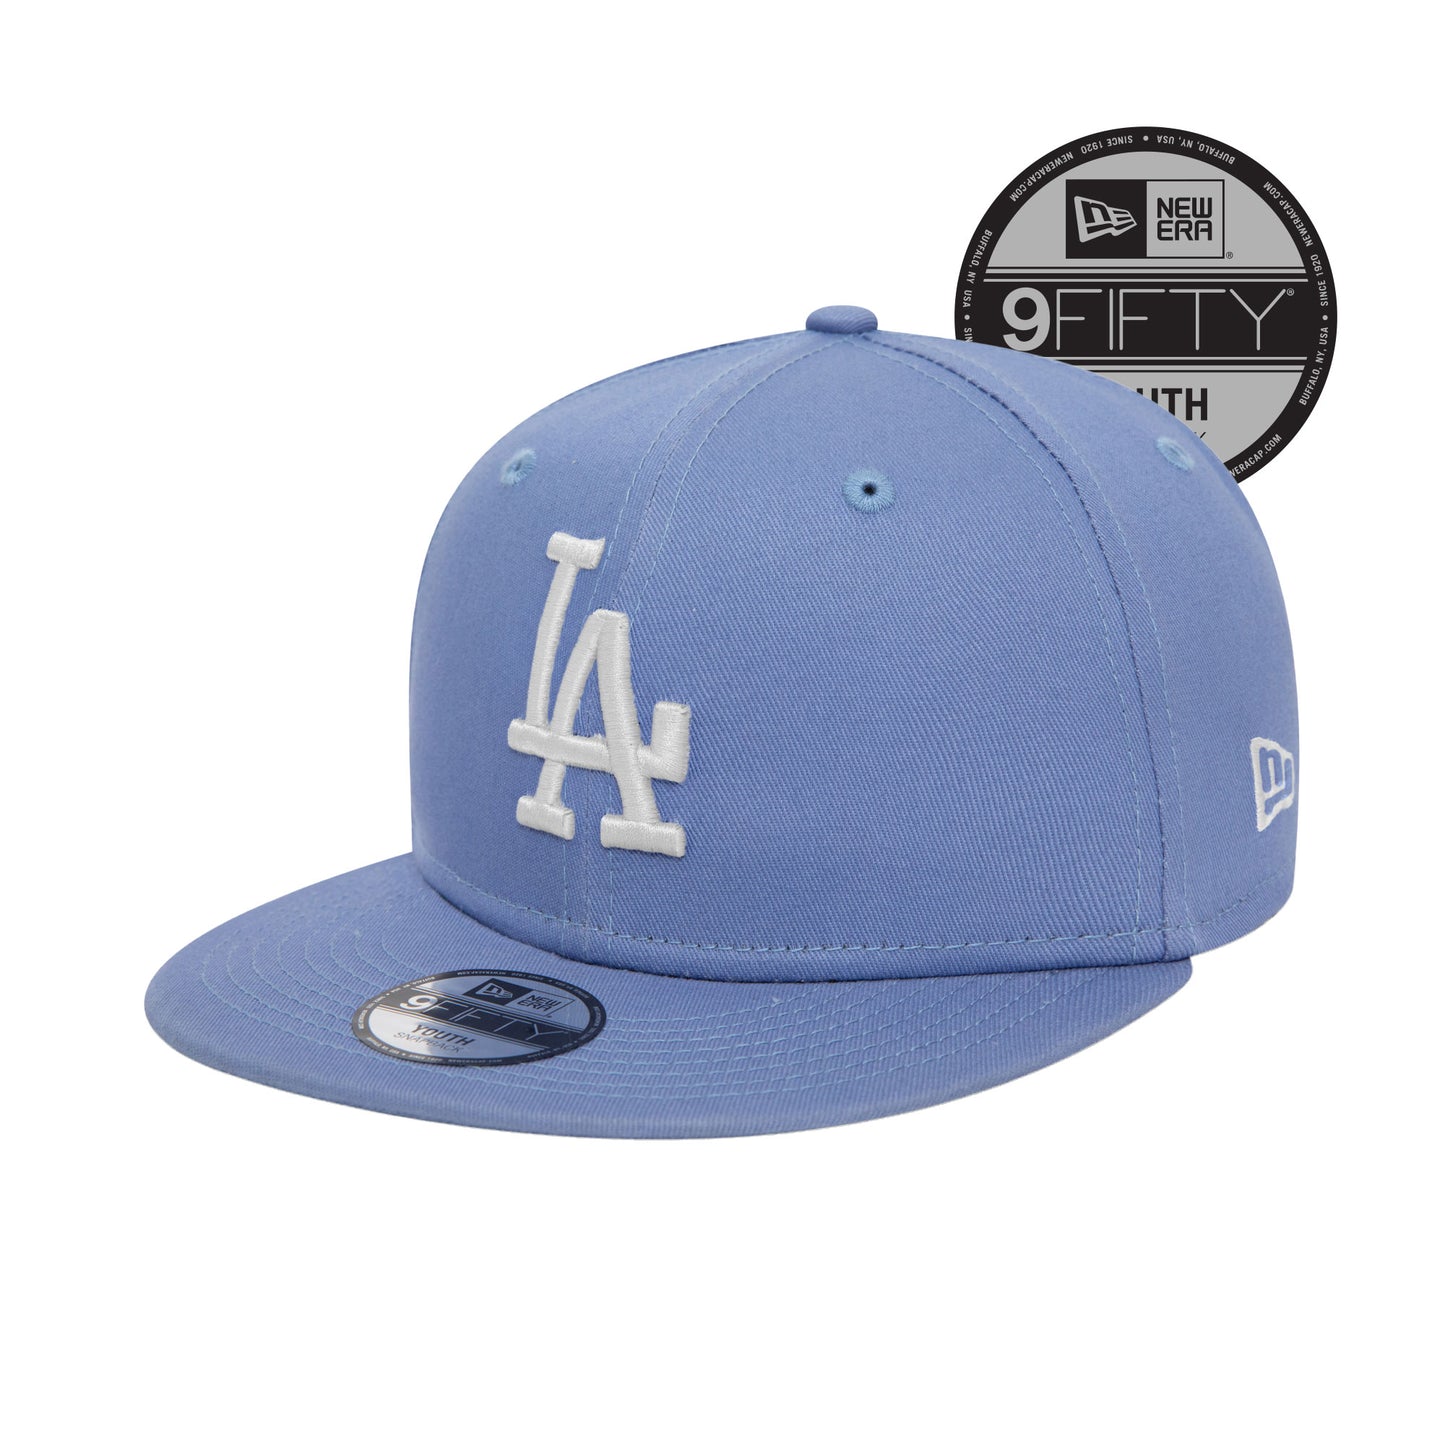 Los Angeles Dodgers 9FIFTY KIDS New Era Snap Back blue